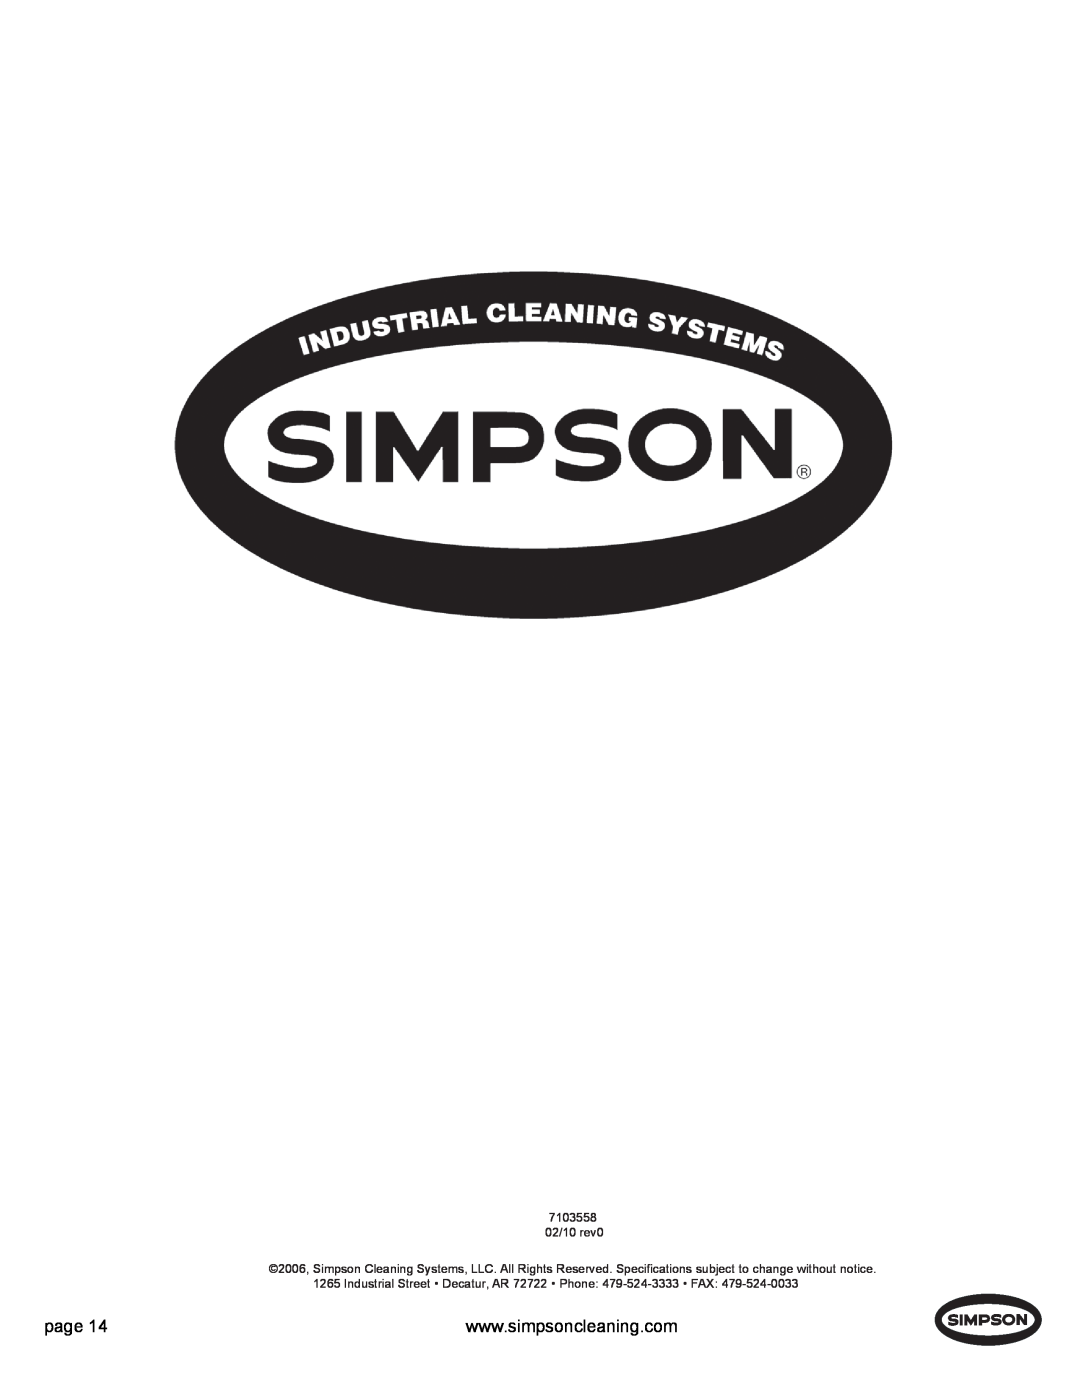 Simpson PS4240H manual page, 7103558 02/10 rev0 